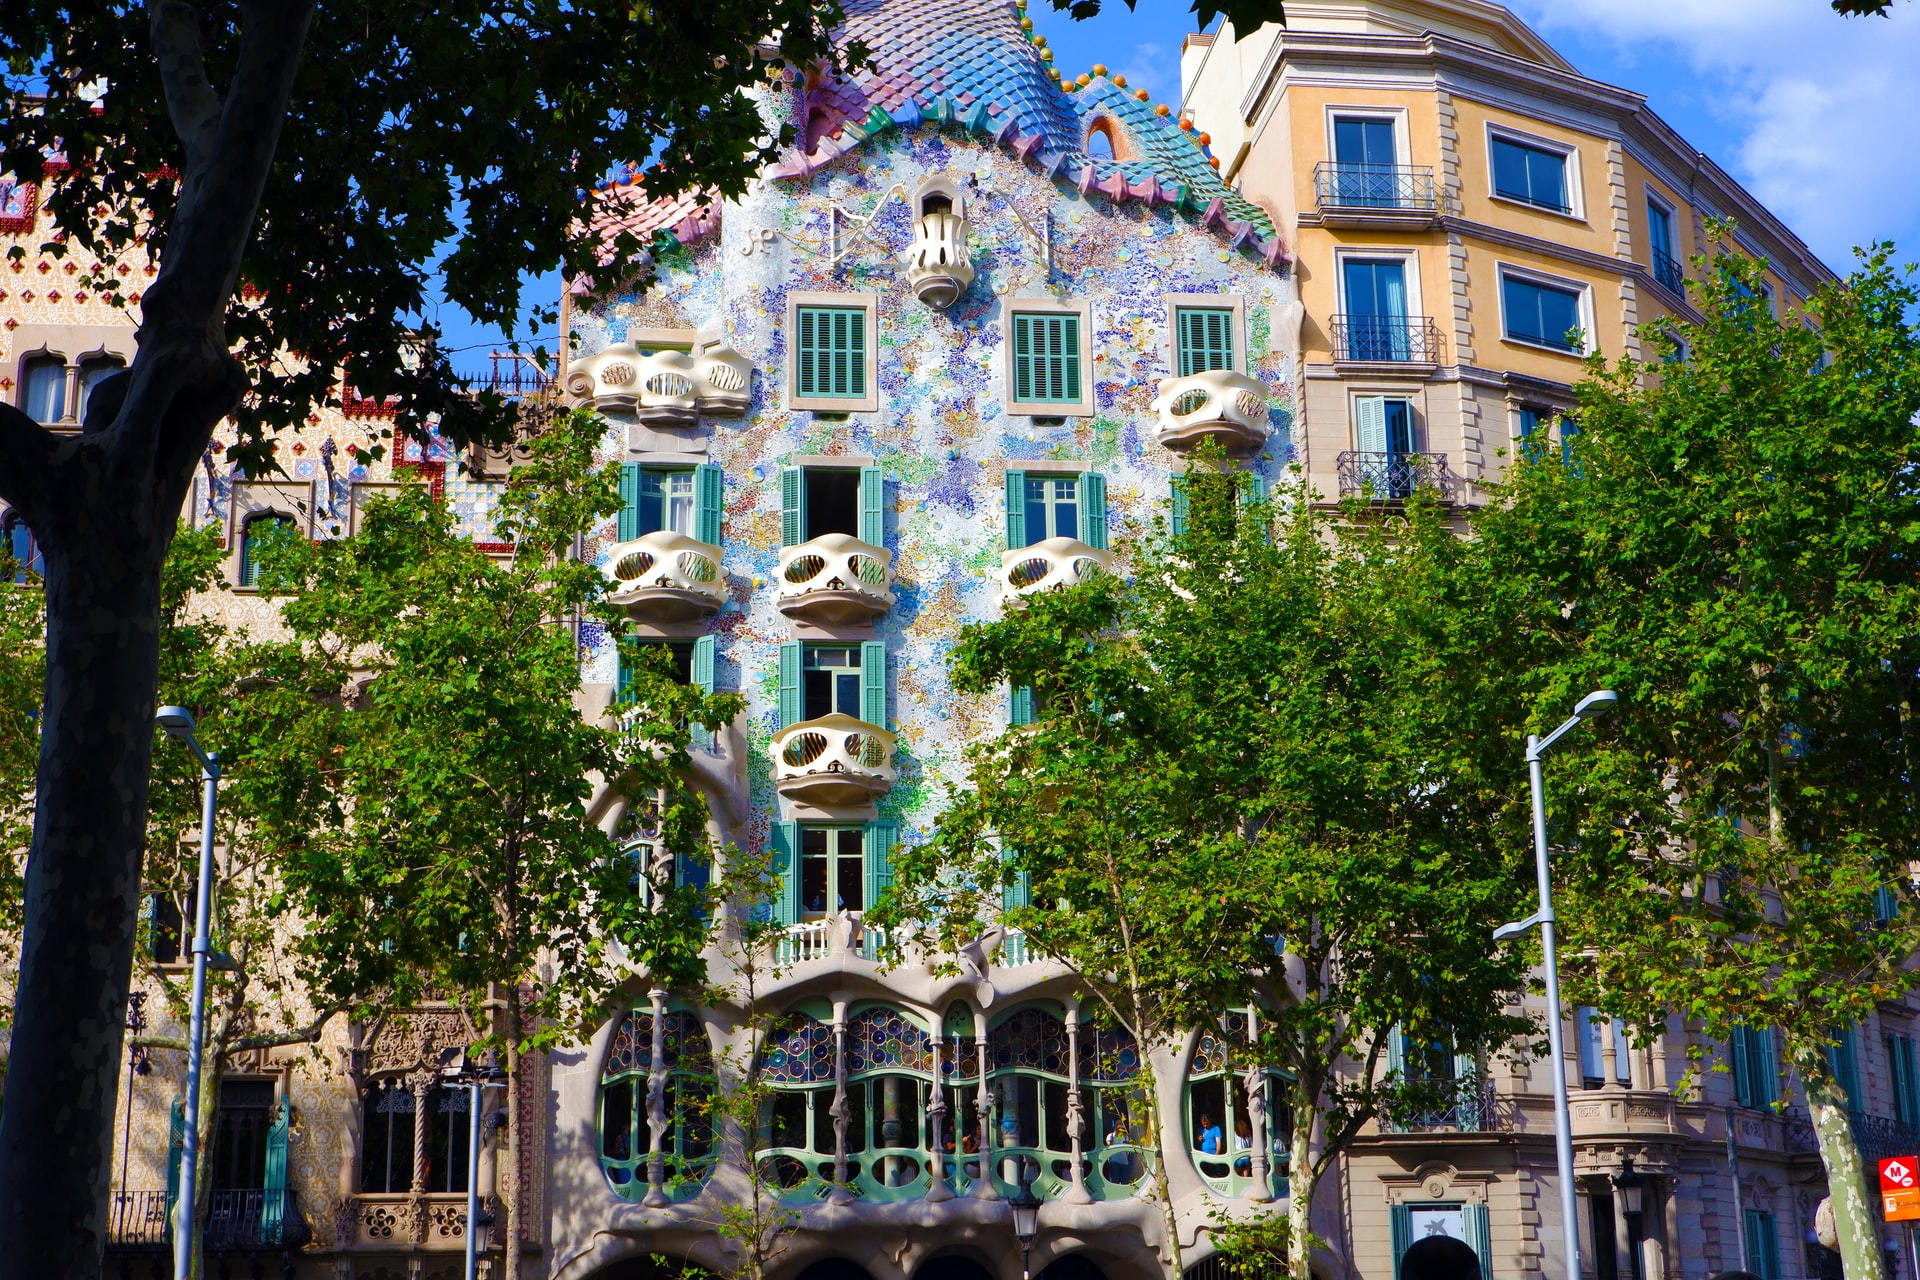 Gaudi's Casa Batllo in Barcelona, Spain